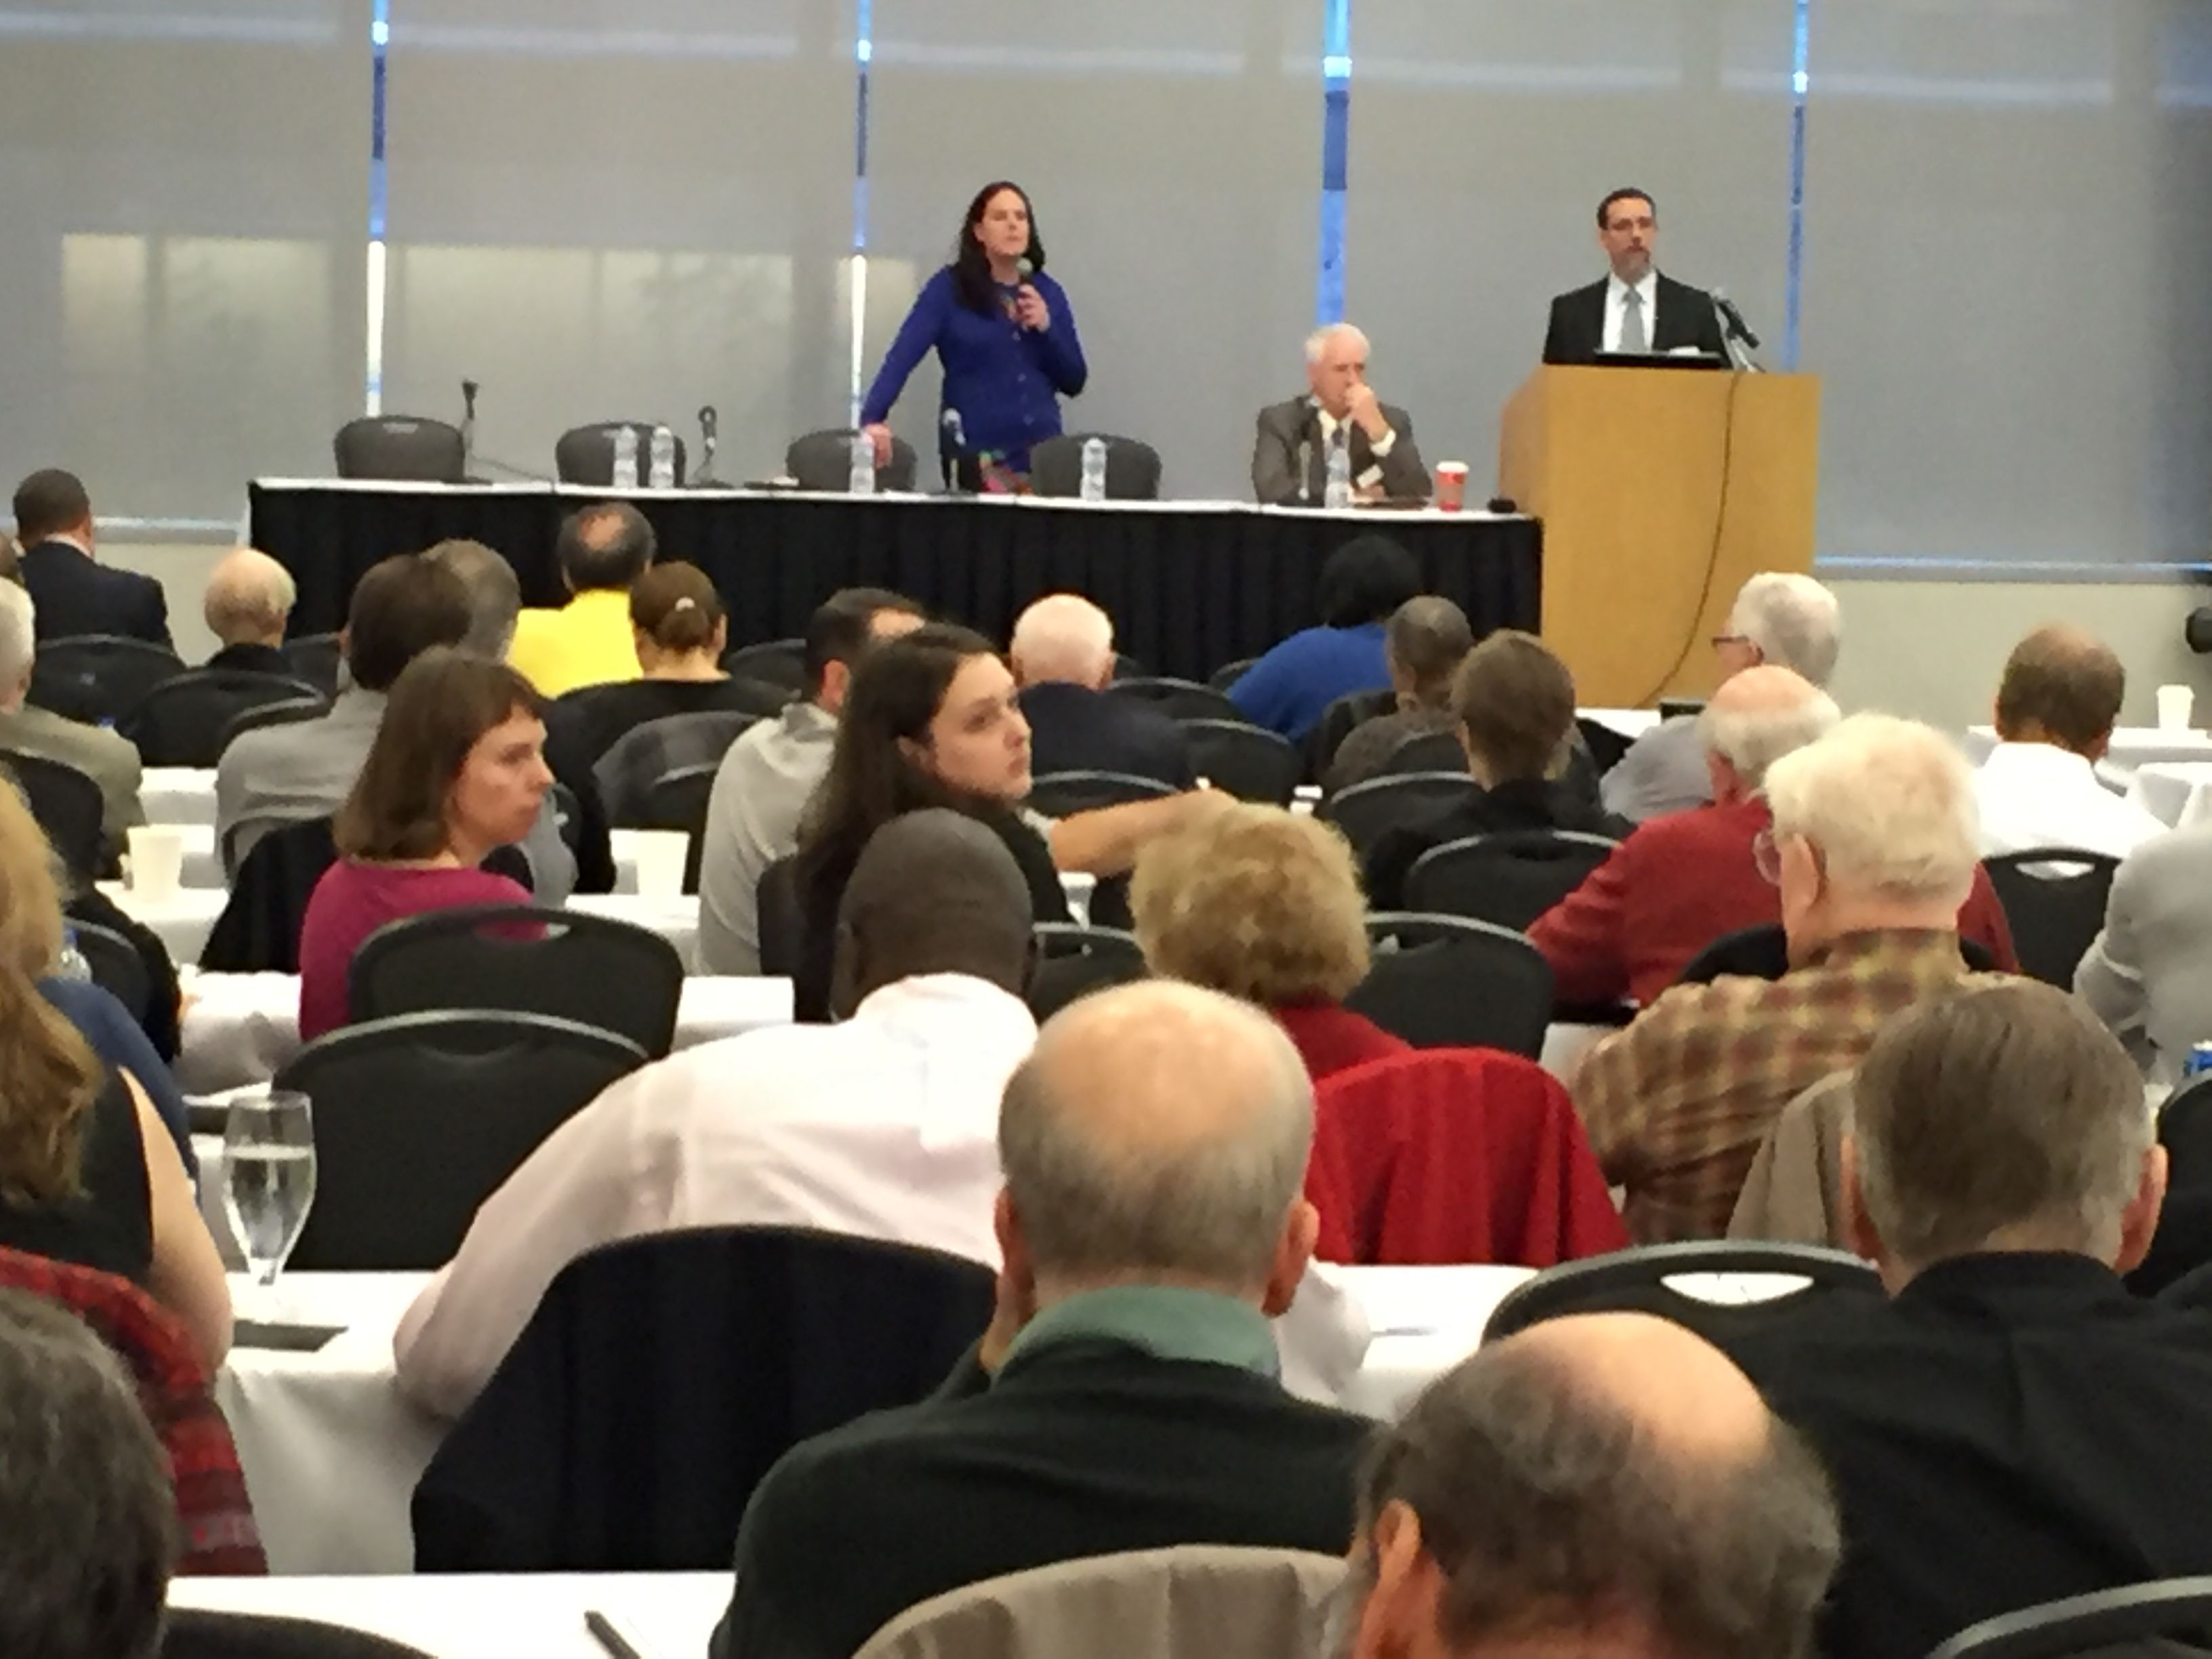 2015 Harold Levine Institute speakers and audience